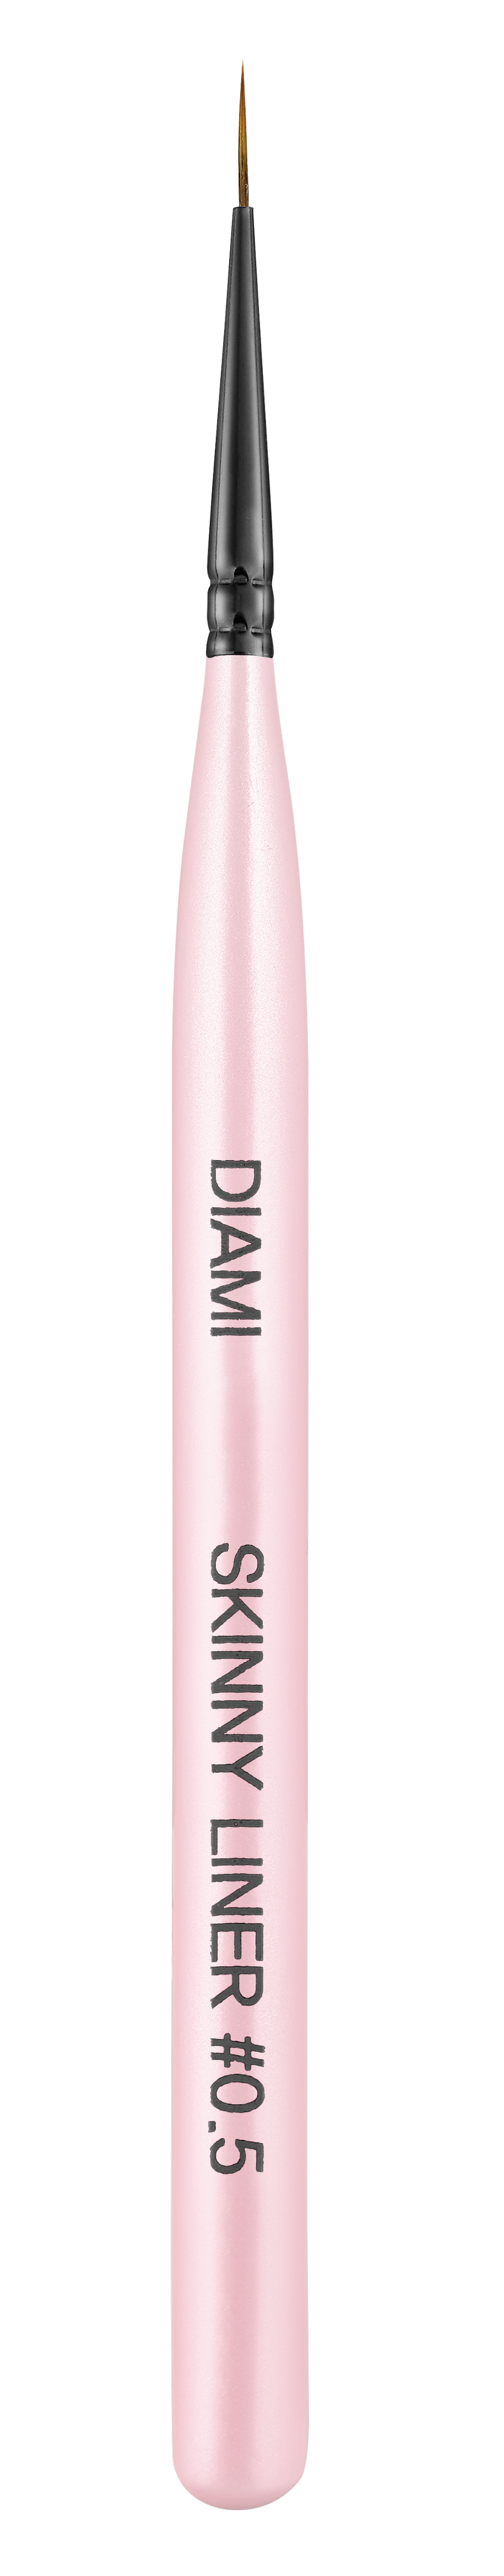 DIAMI 0.5 skinny liner brush #0.5